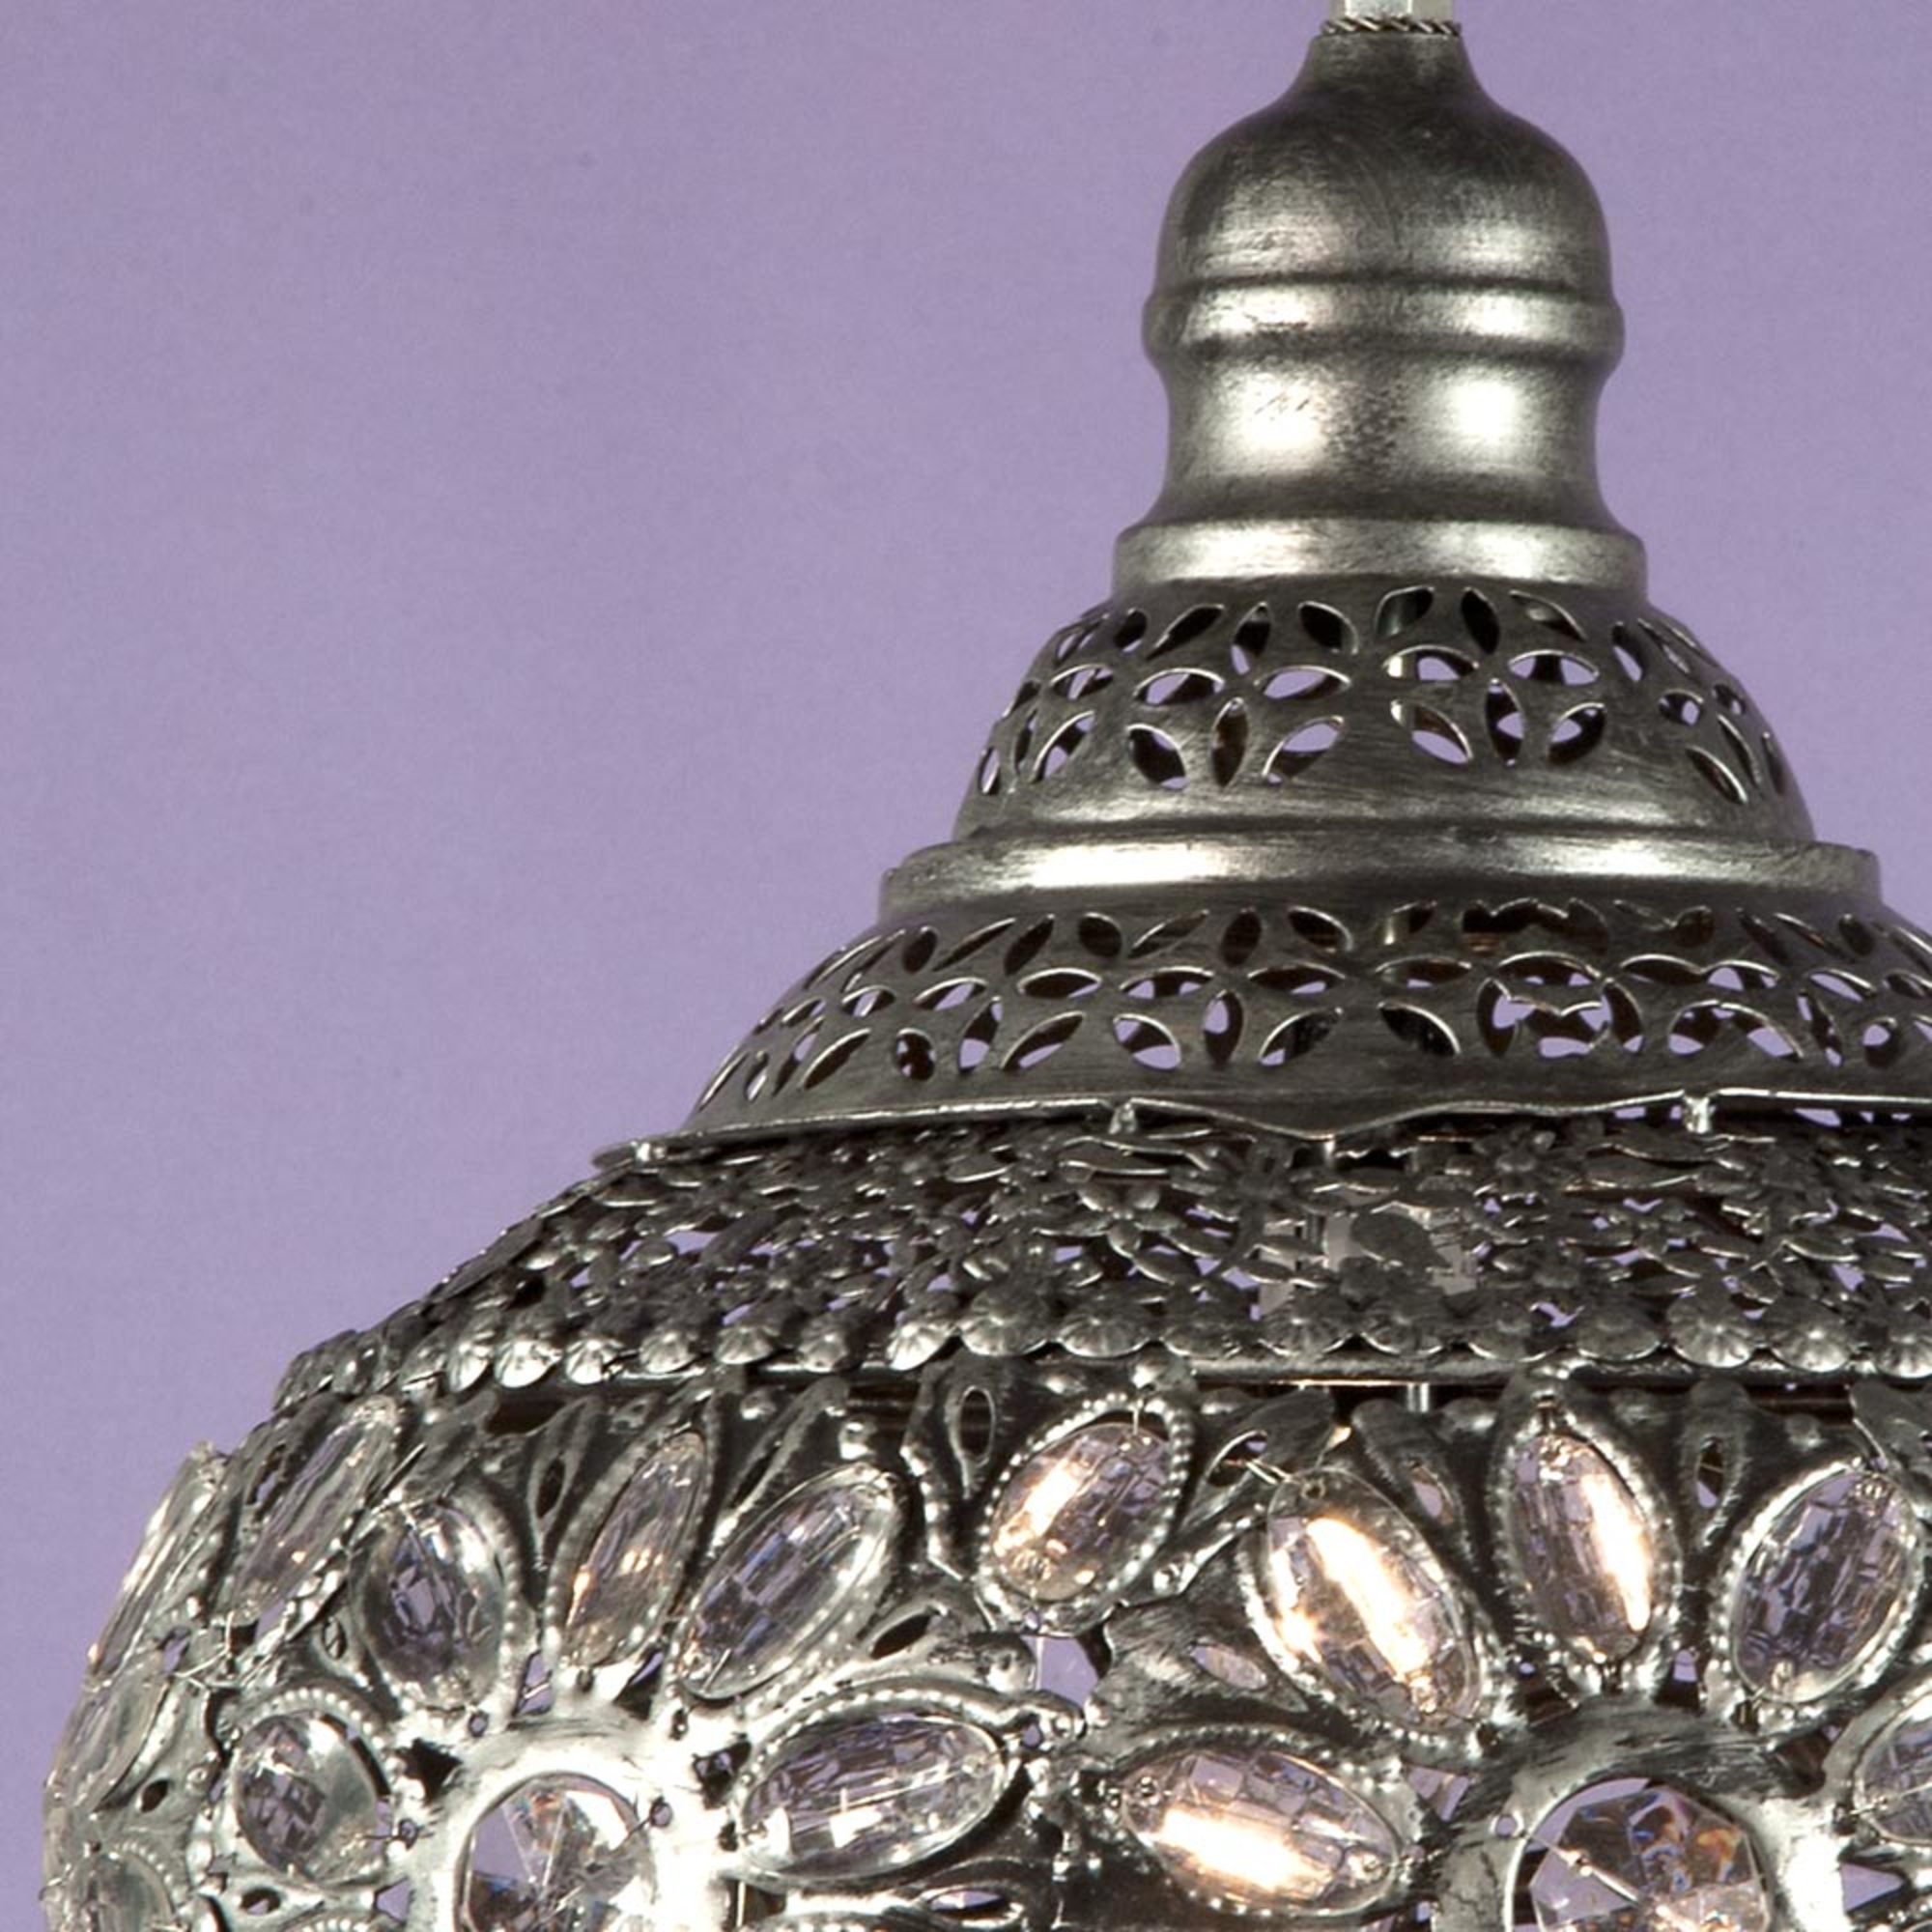 Jewelled Chandelier Light - Antique Silver